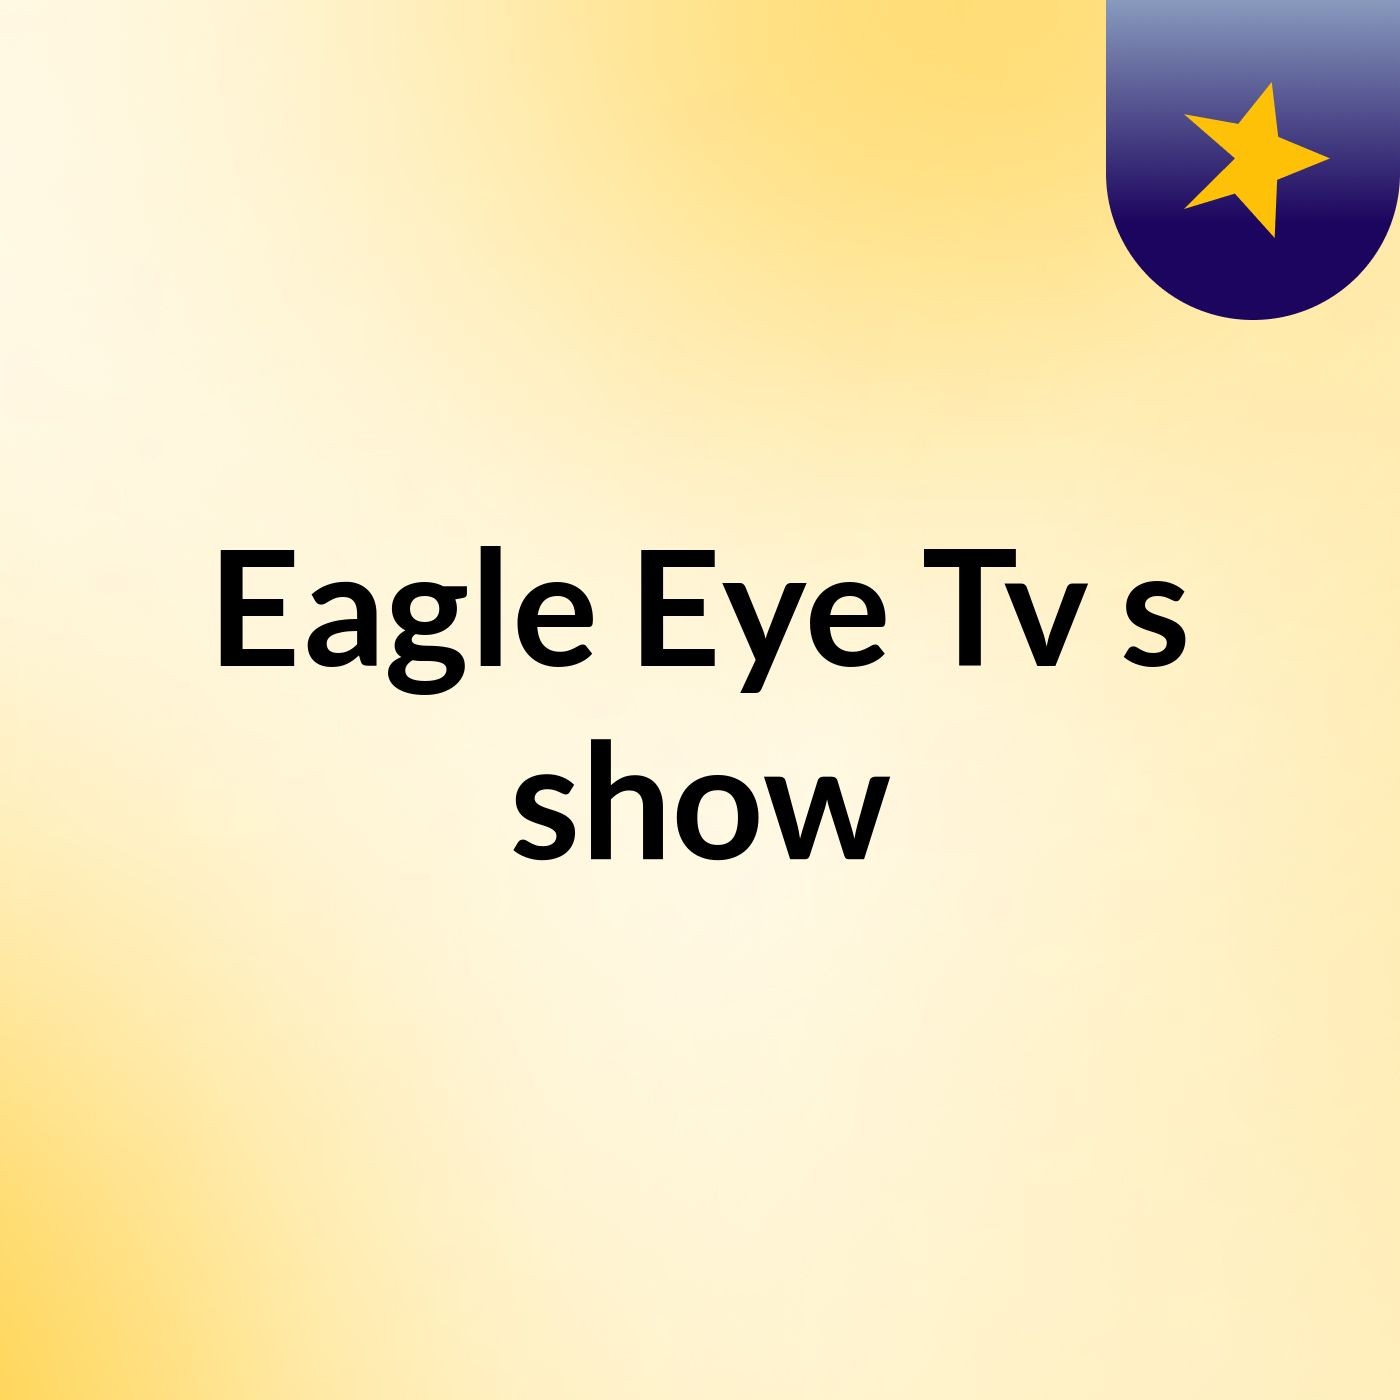 Eagle Eye Tv's show